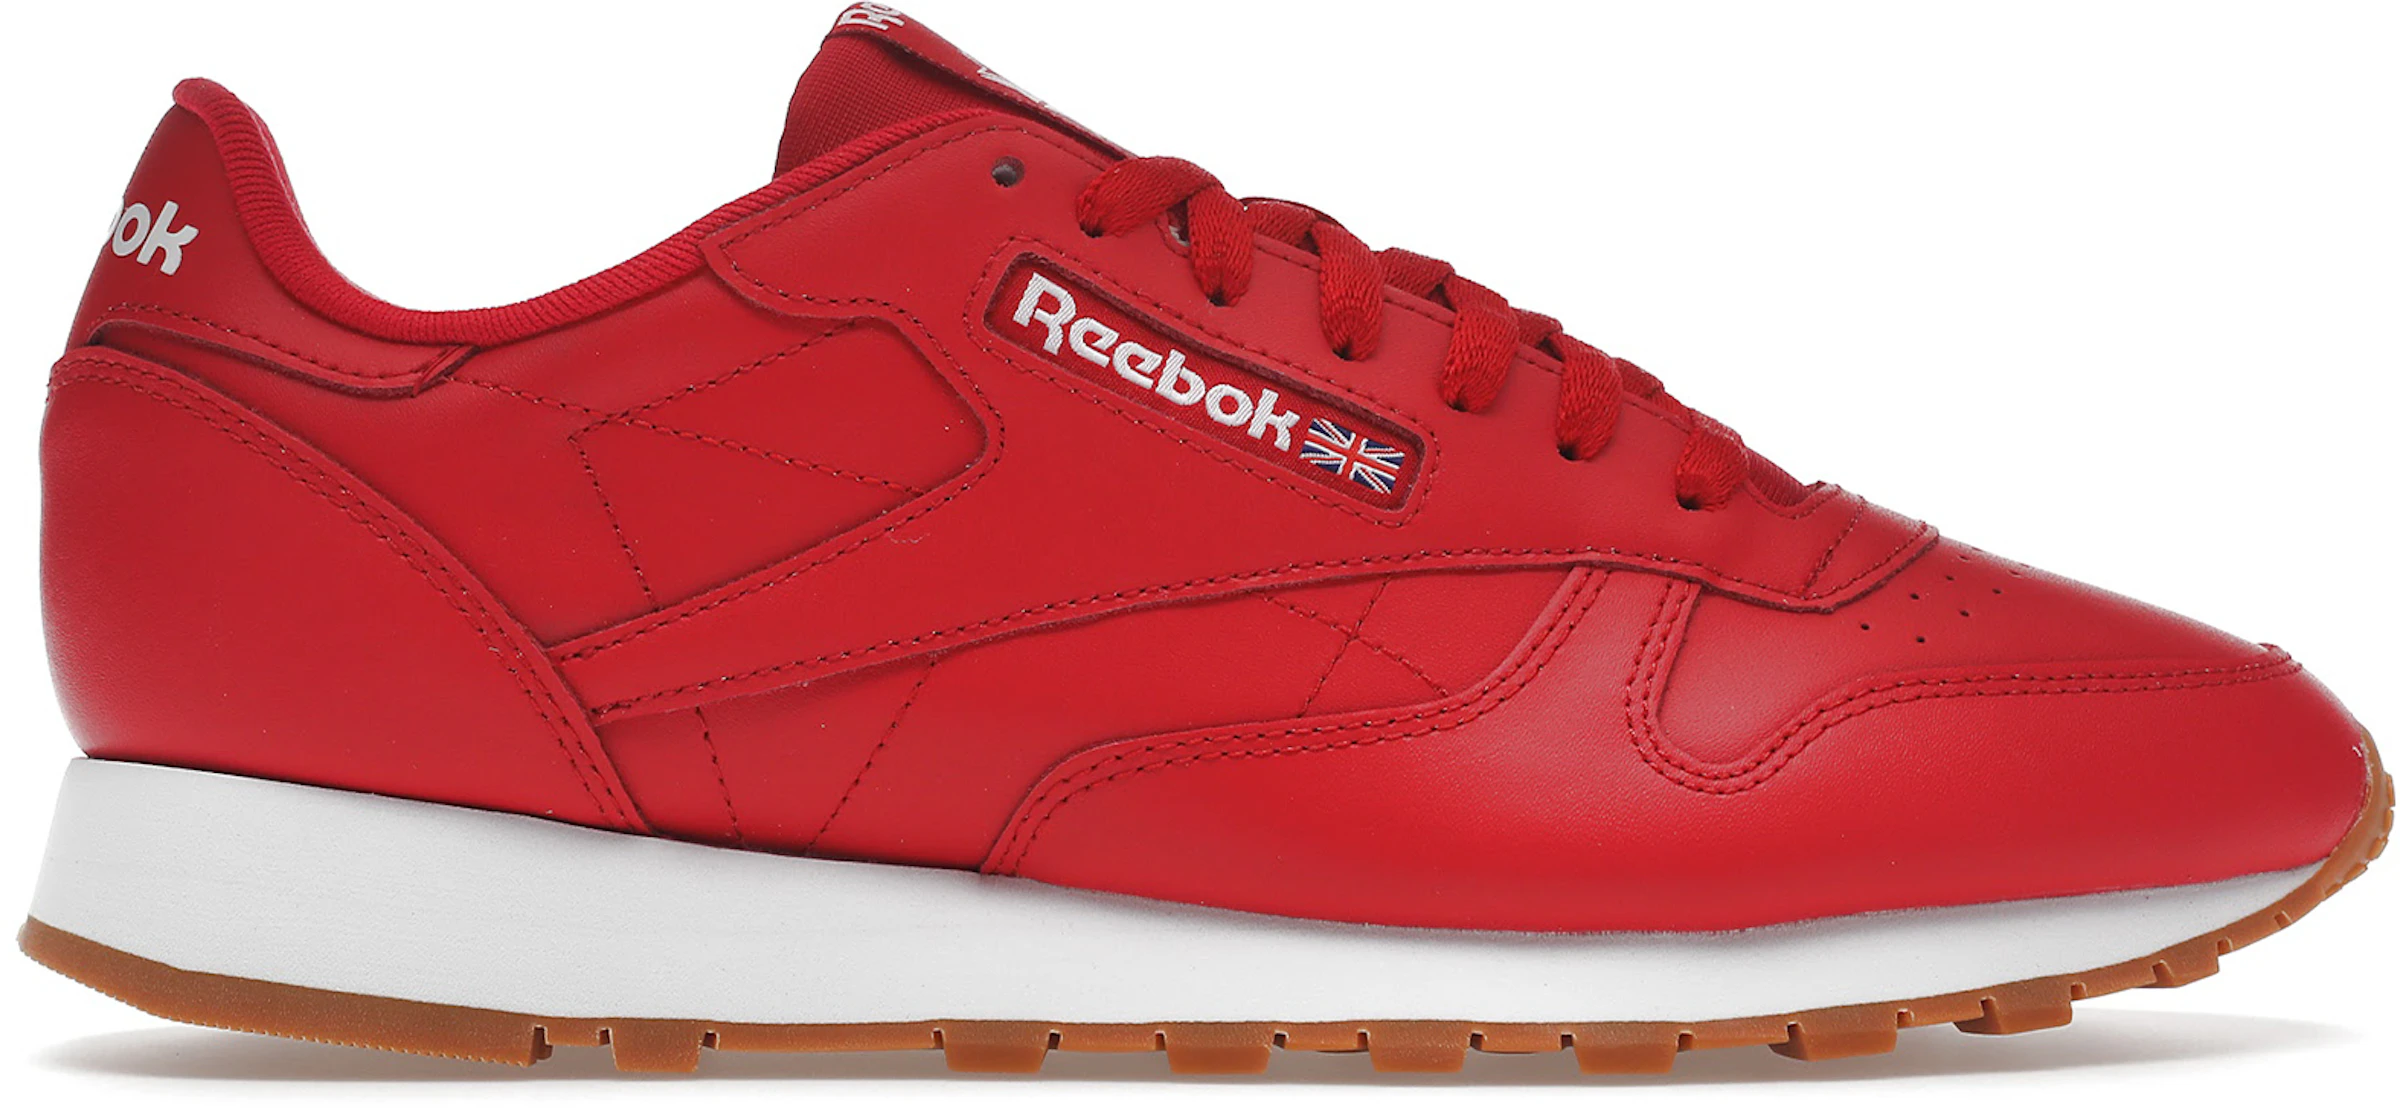 almuerzo esta noche Delgado Reebok Classic Leather Red Footwear White - GY3601 - ES